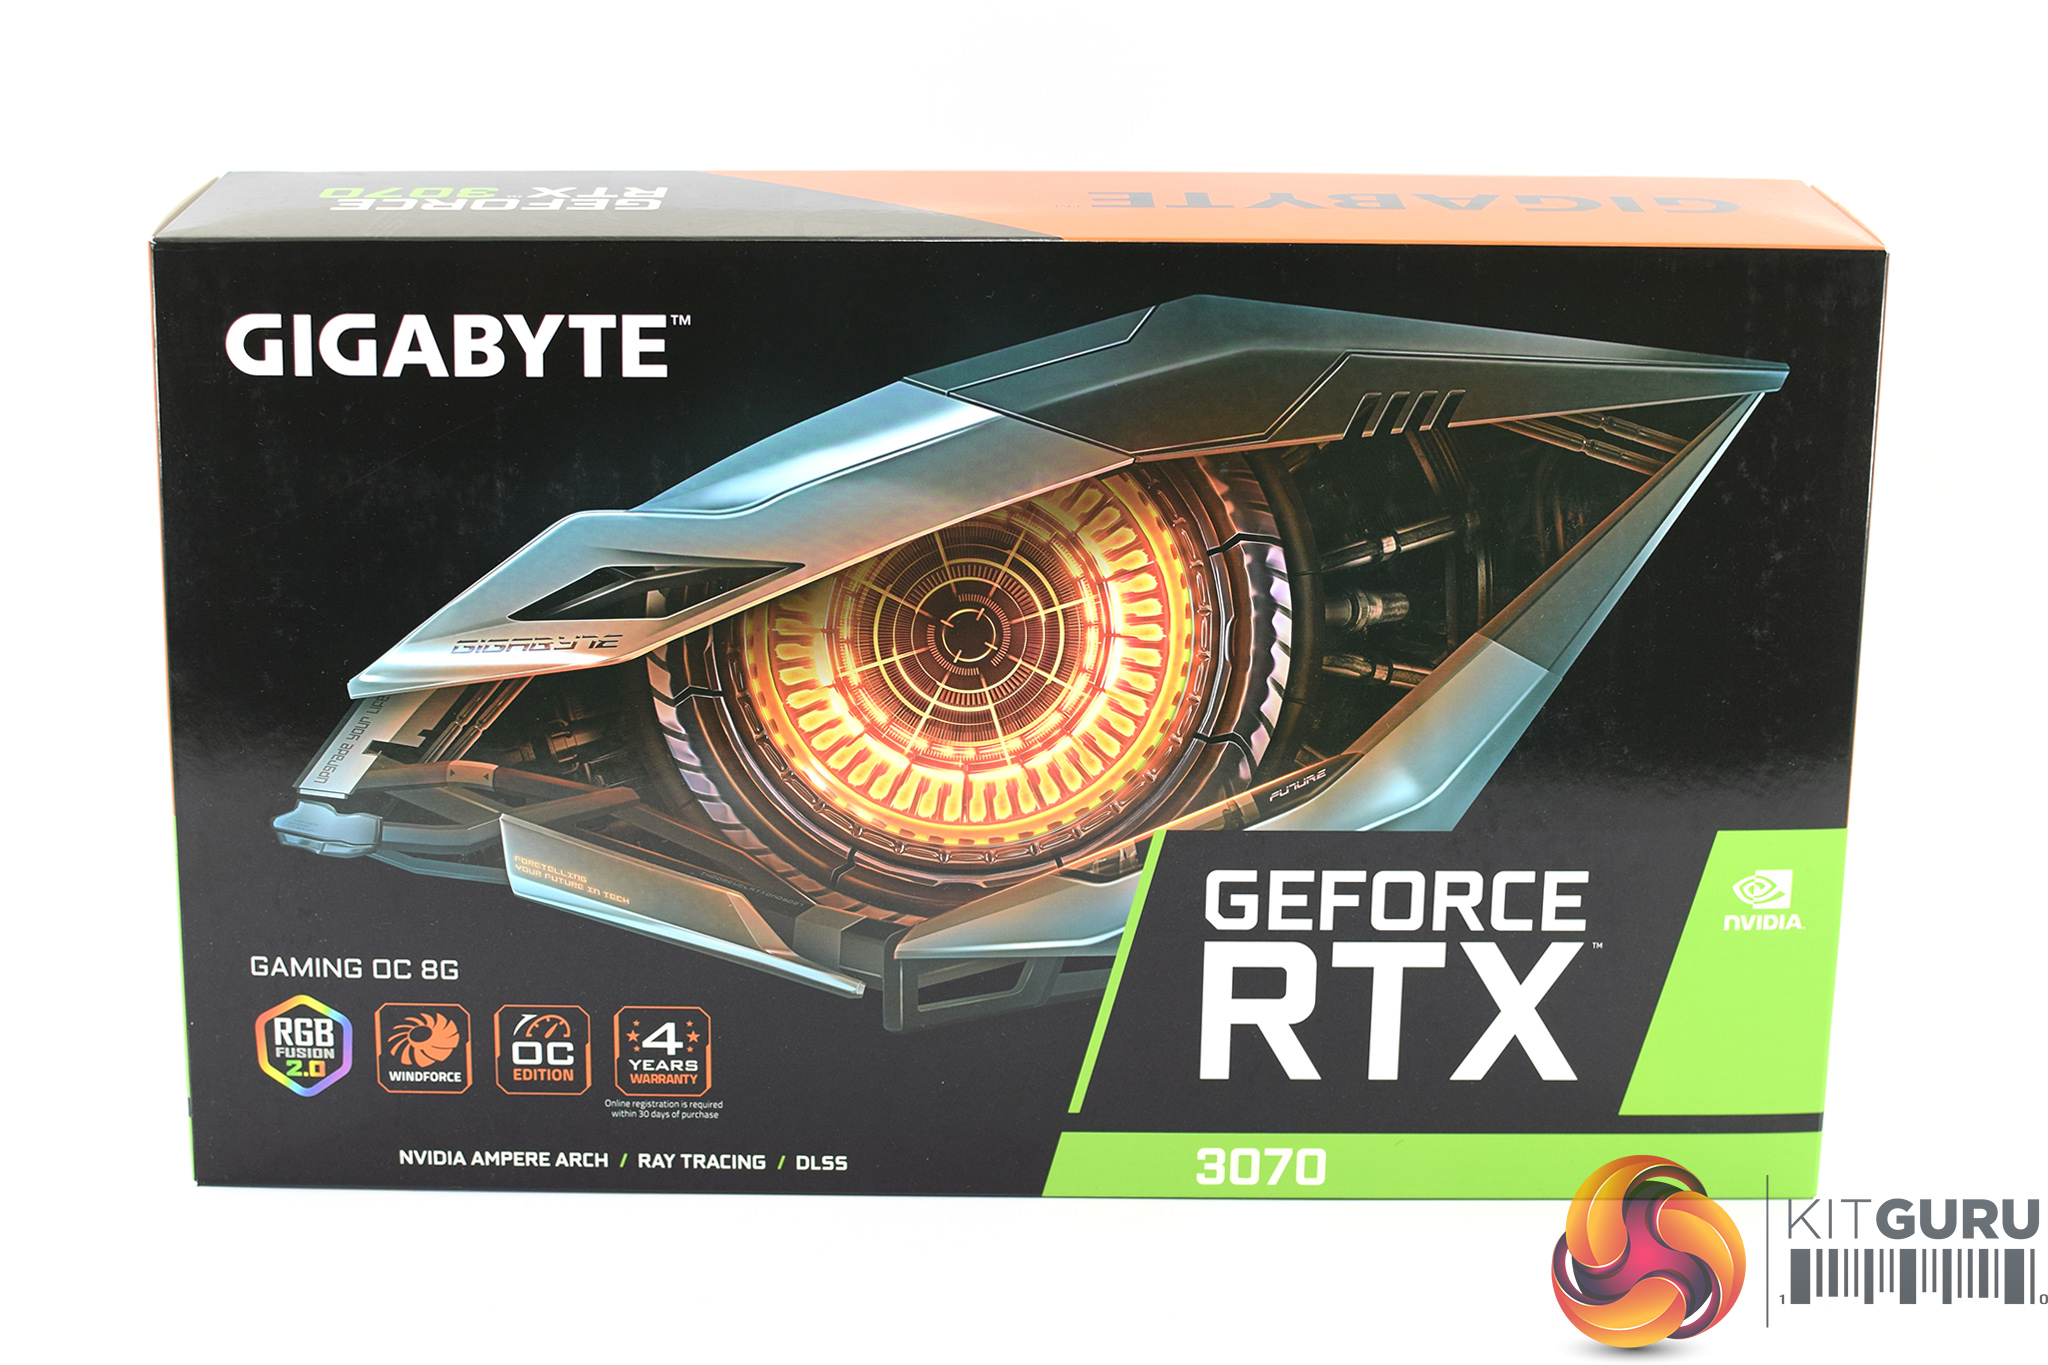 Gigabyte RTX 3070 Gaming OC Review | KitGuru- Part 2